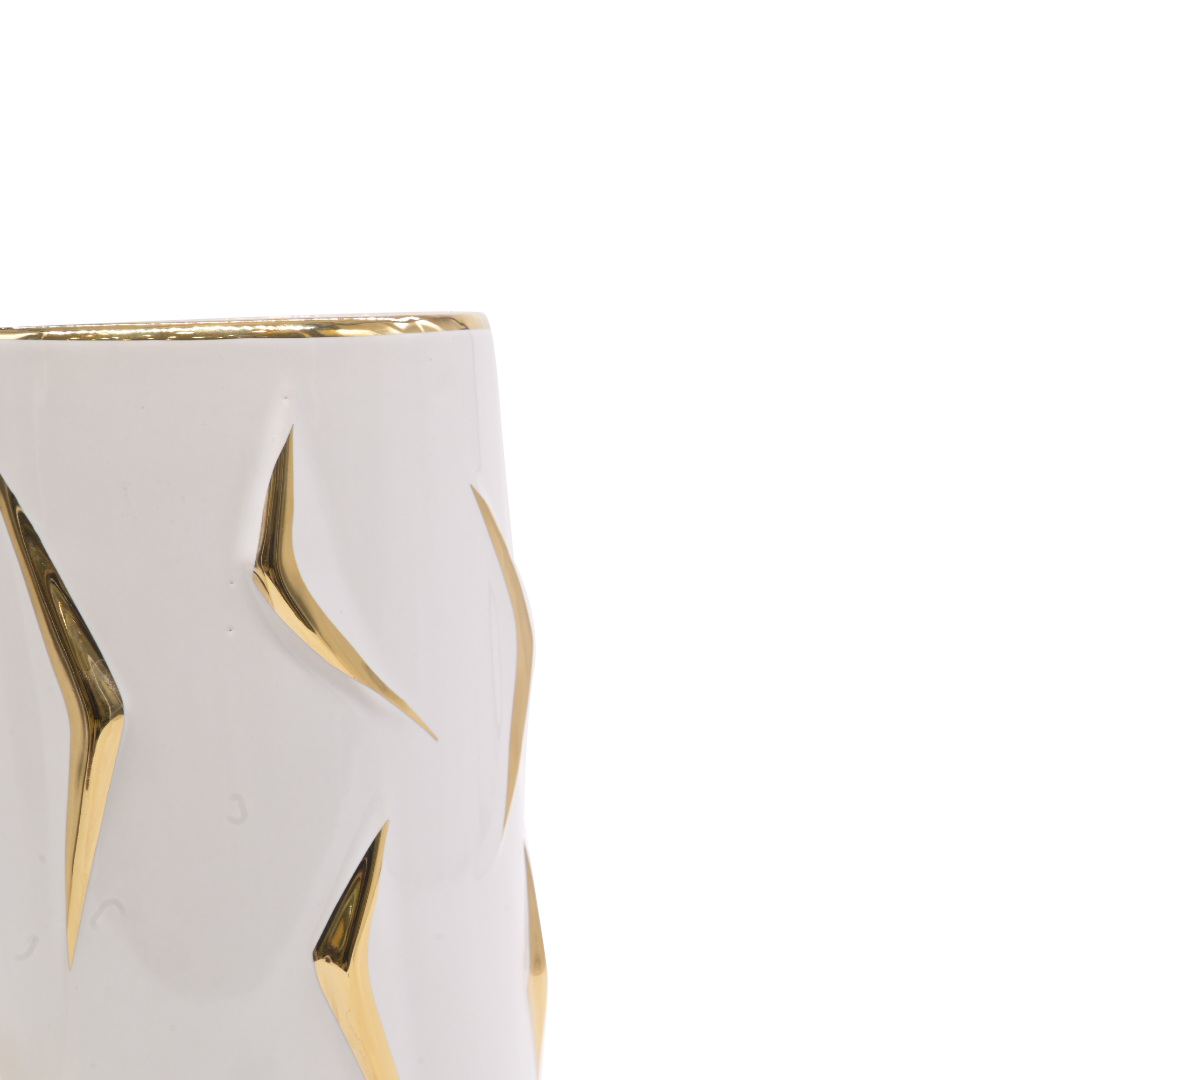 Matte white and gold floral vase (Medium)